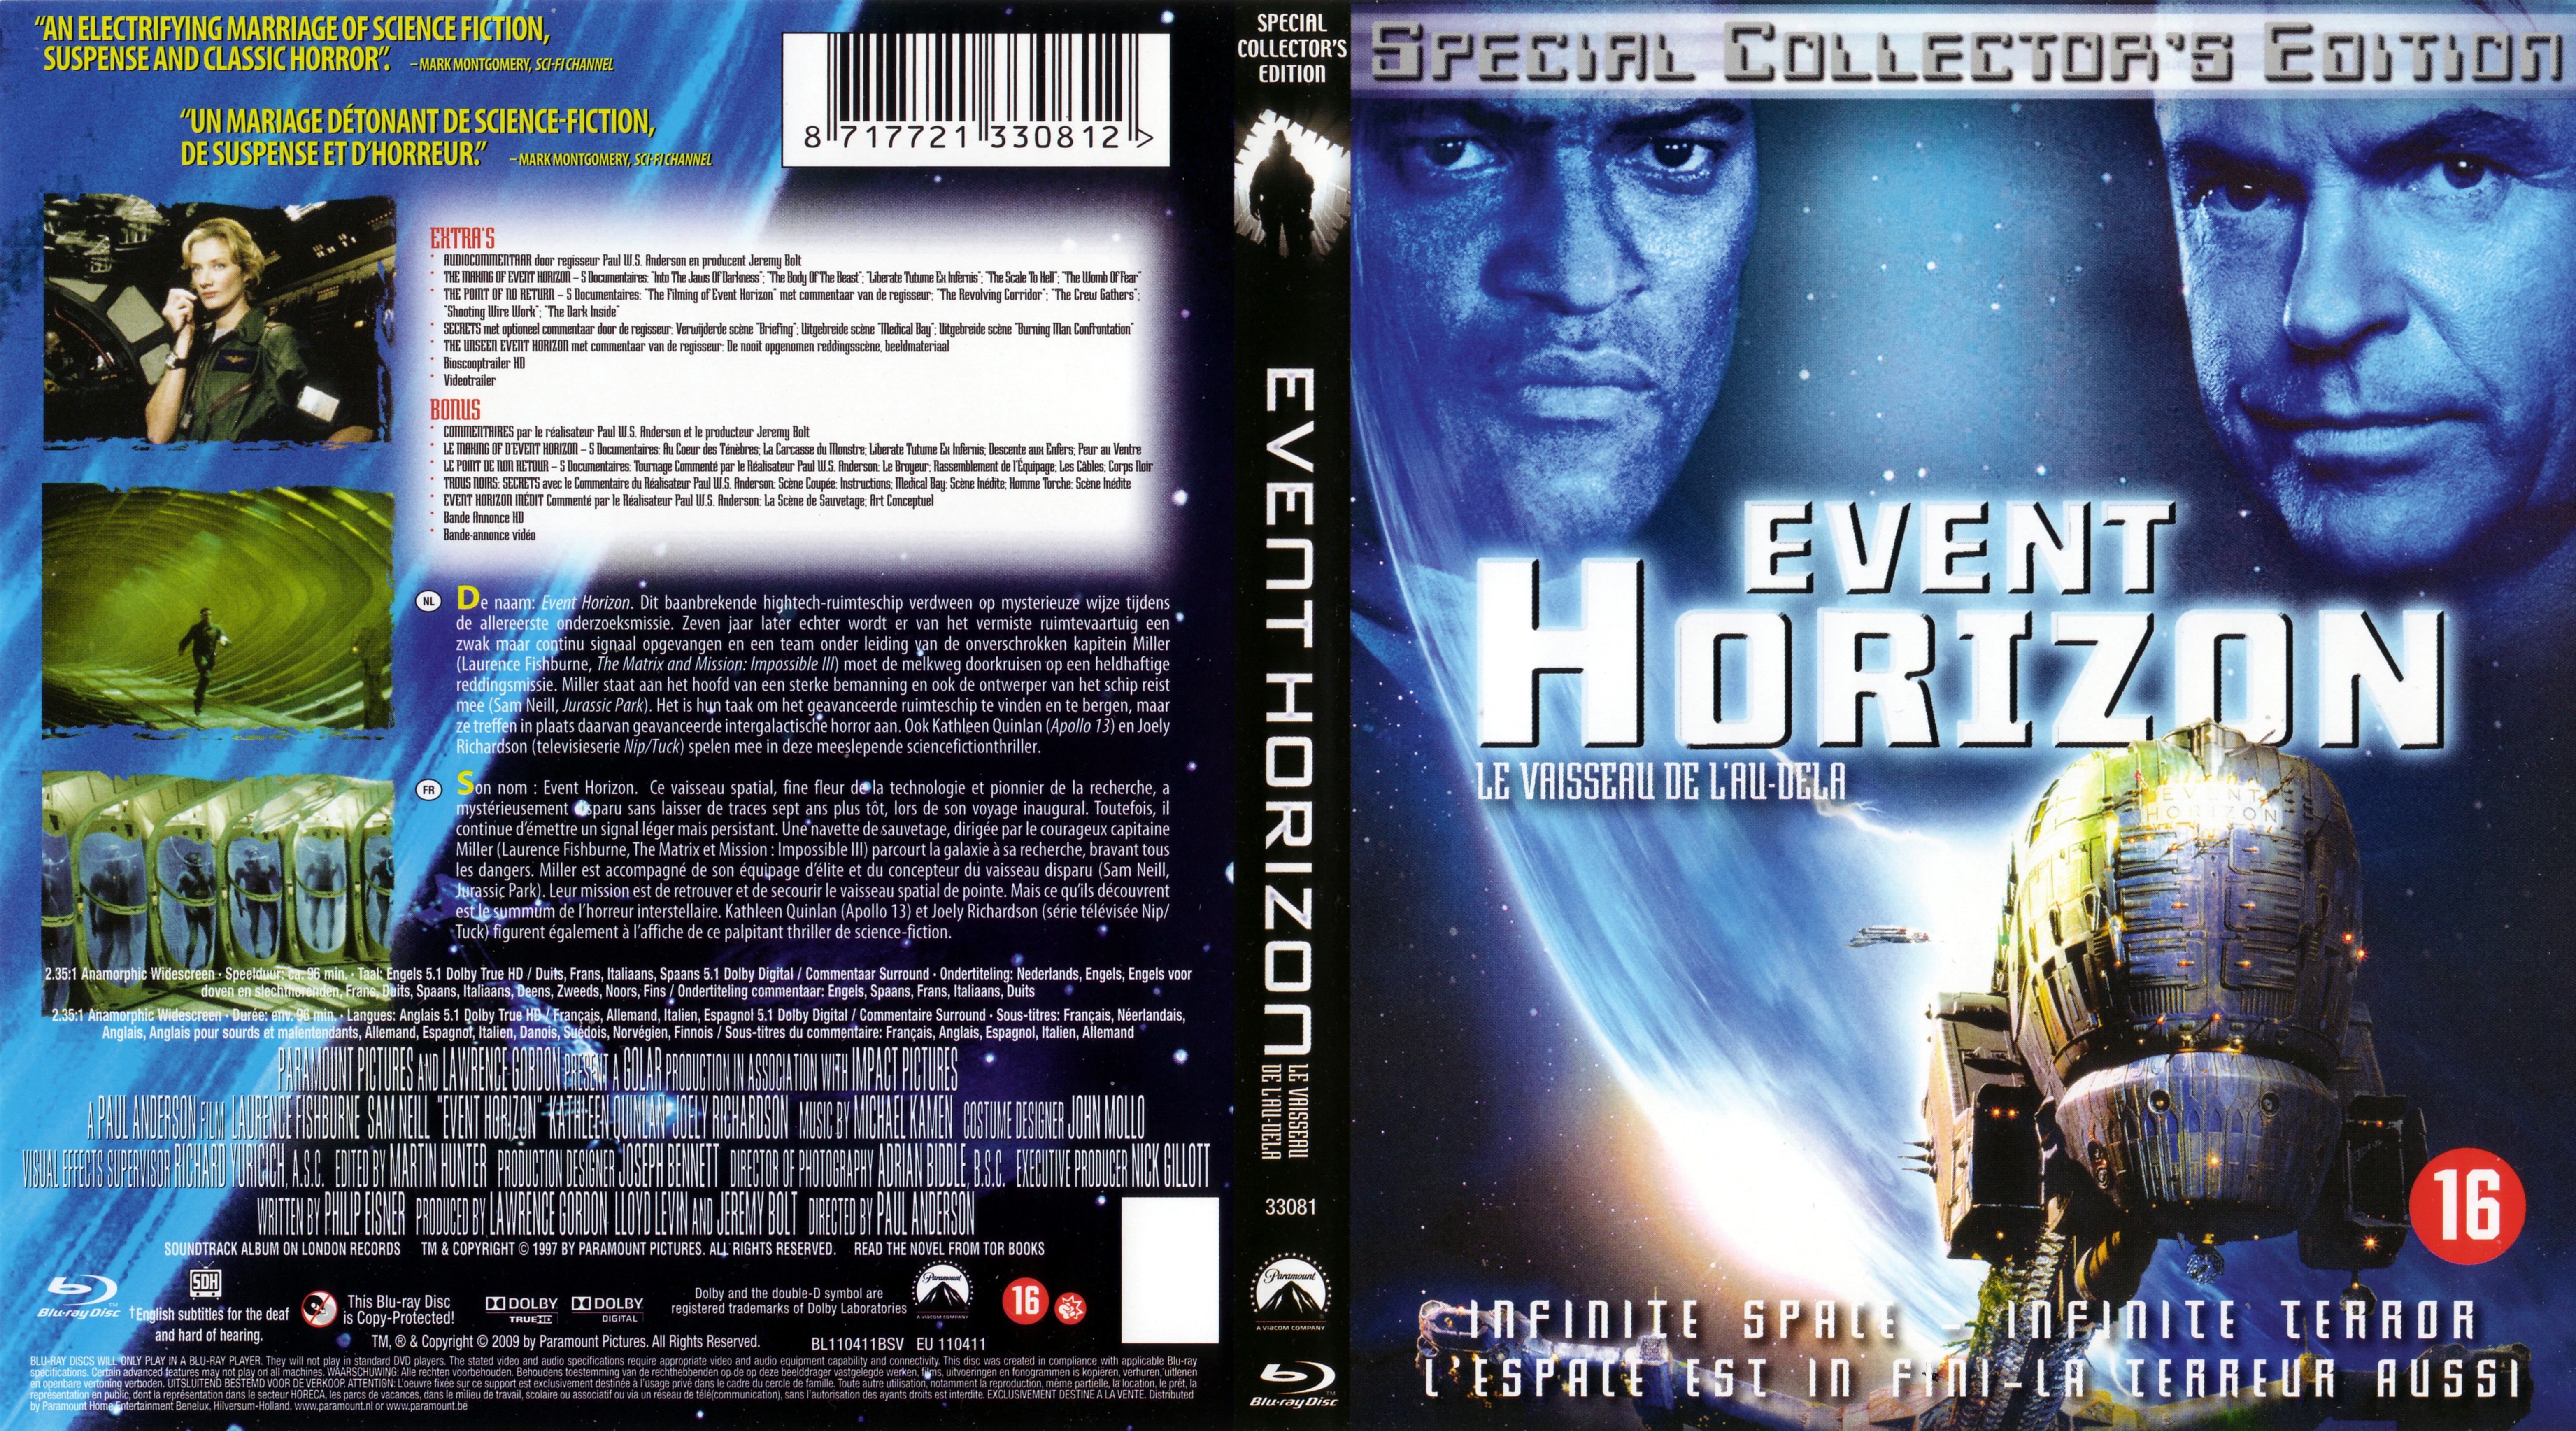 Jaquette DVD Event Horizon (BLU-RAY)